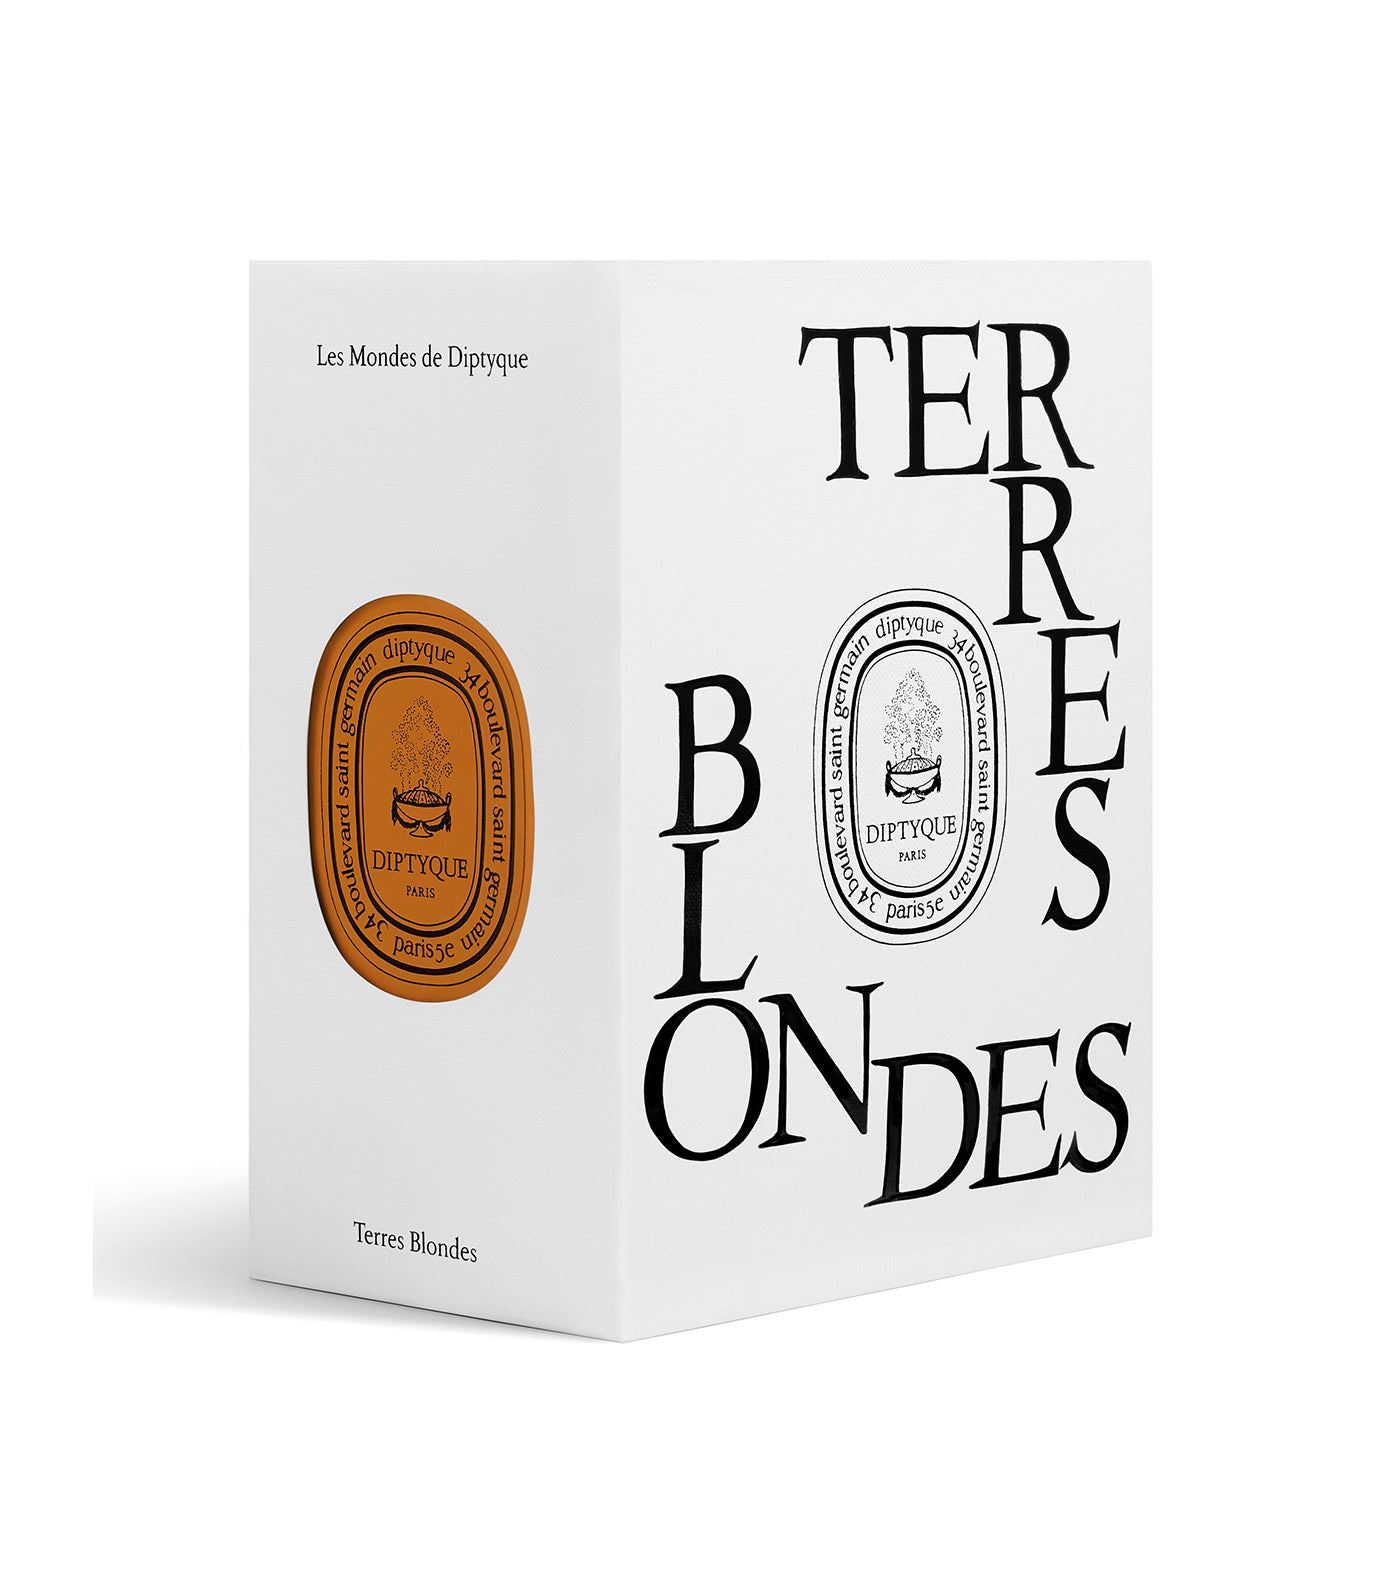 Terres Blondes (Golden Lands) - Premium Refillable Candle